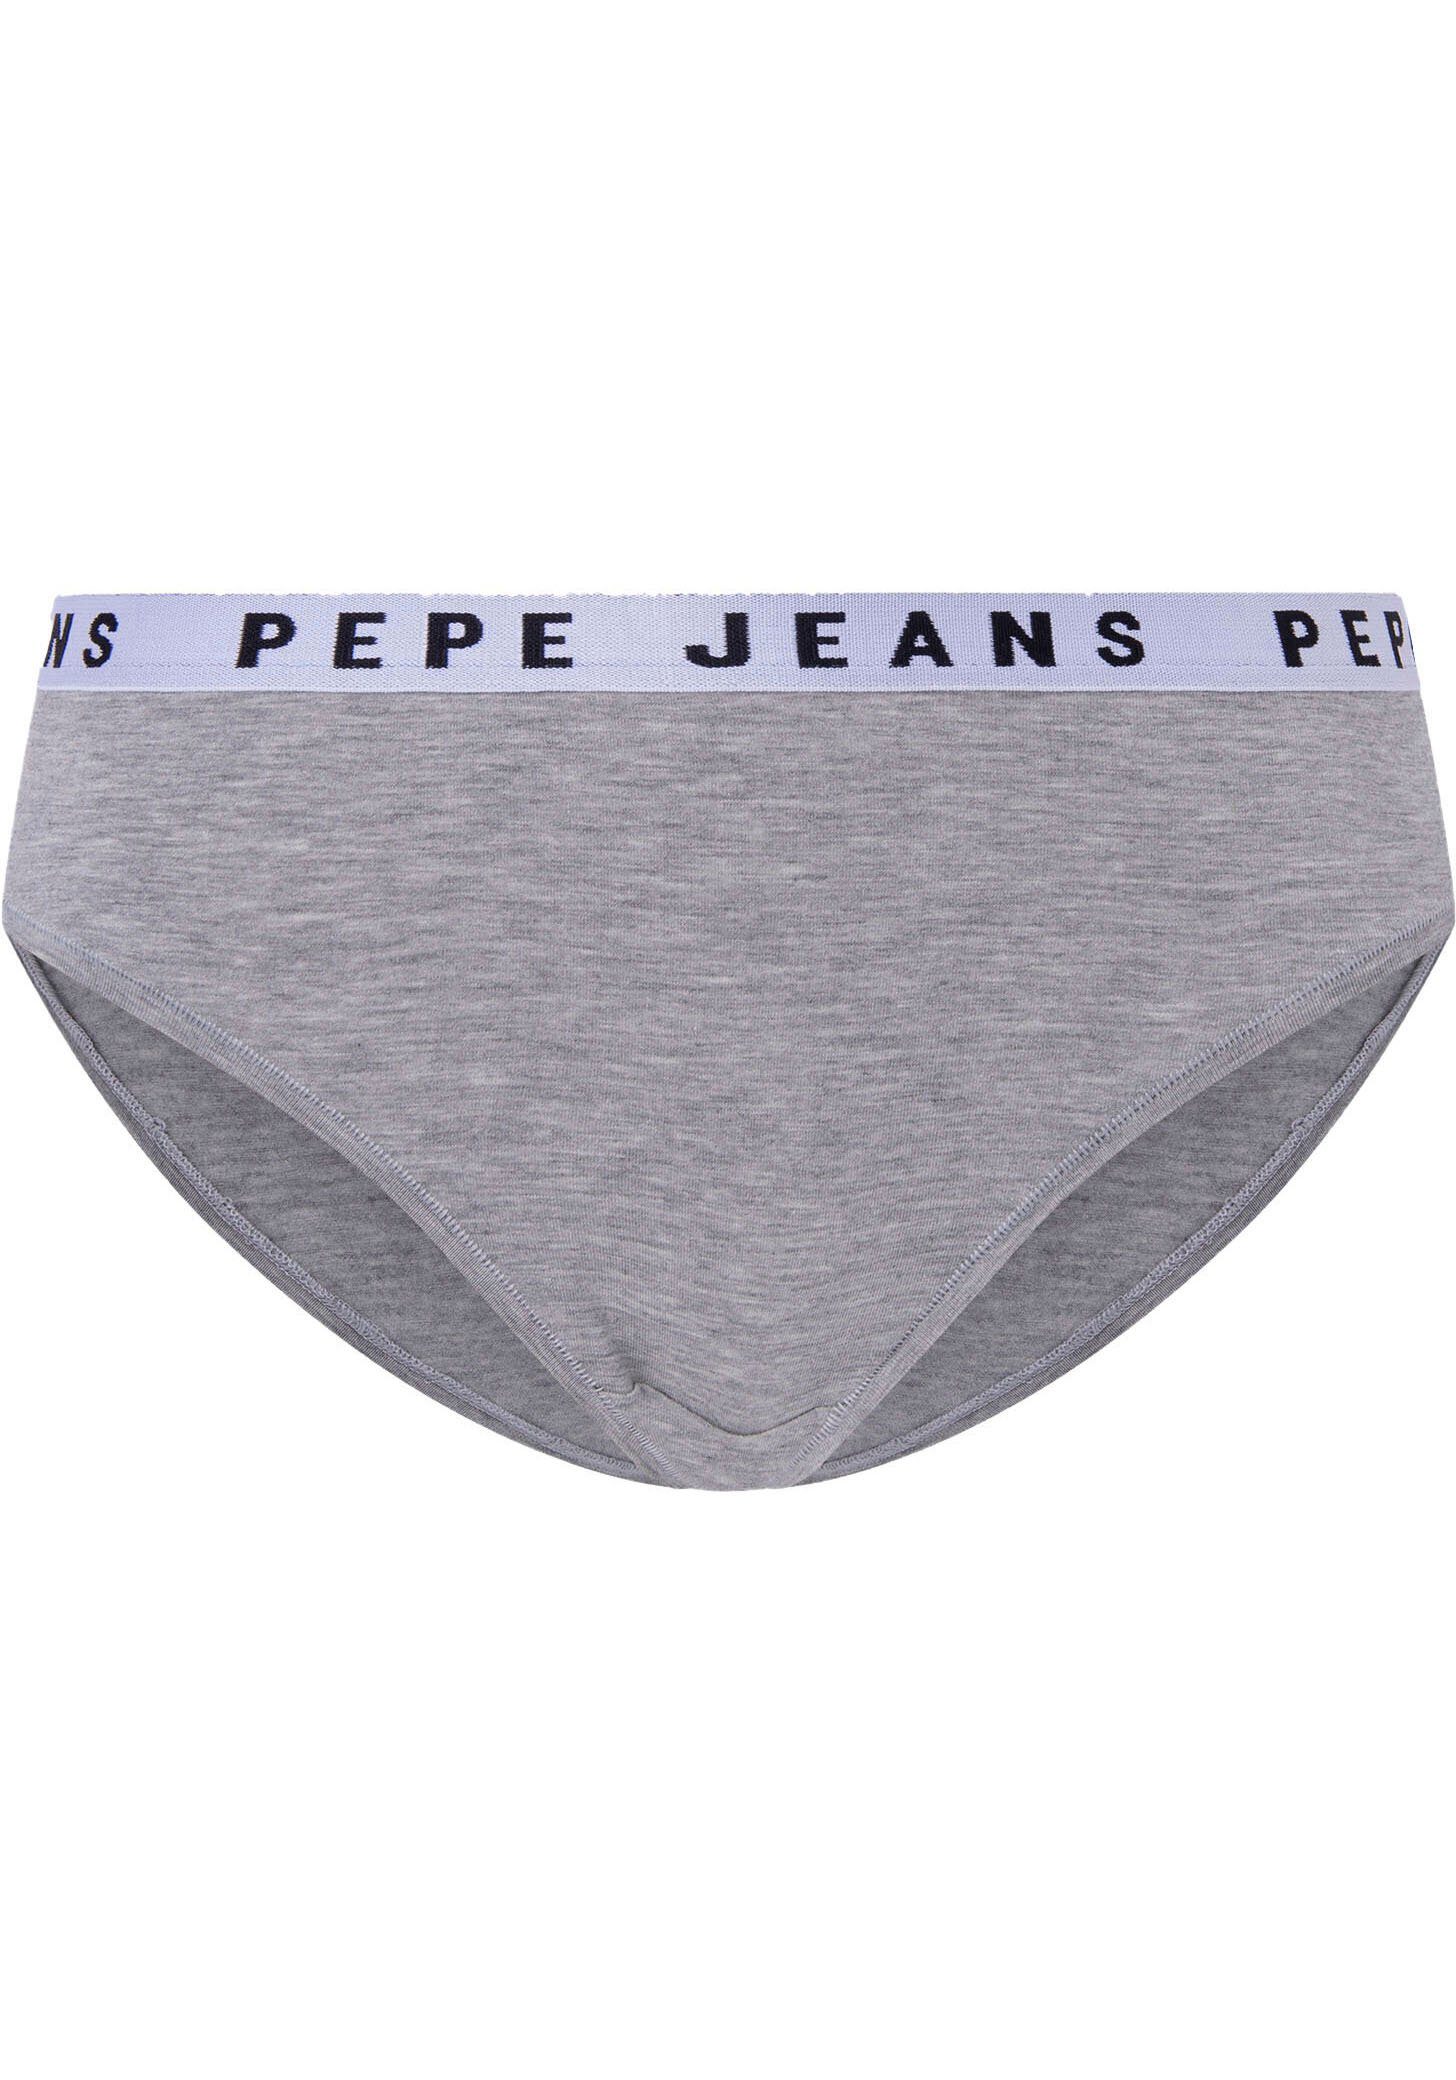 Pepe Jeans Slip grey marl